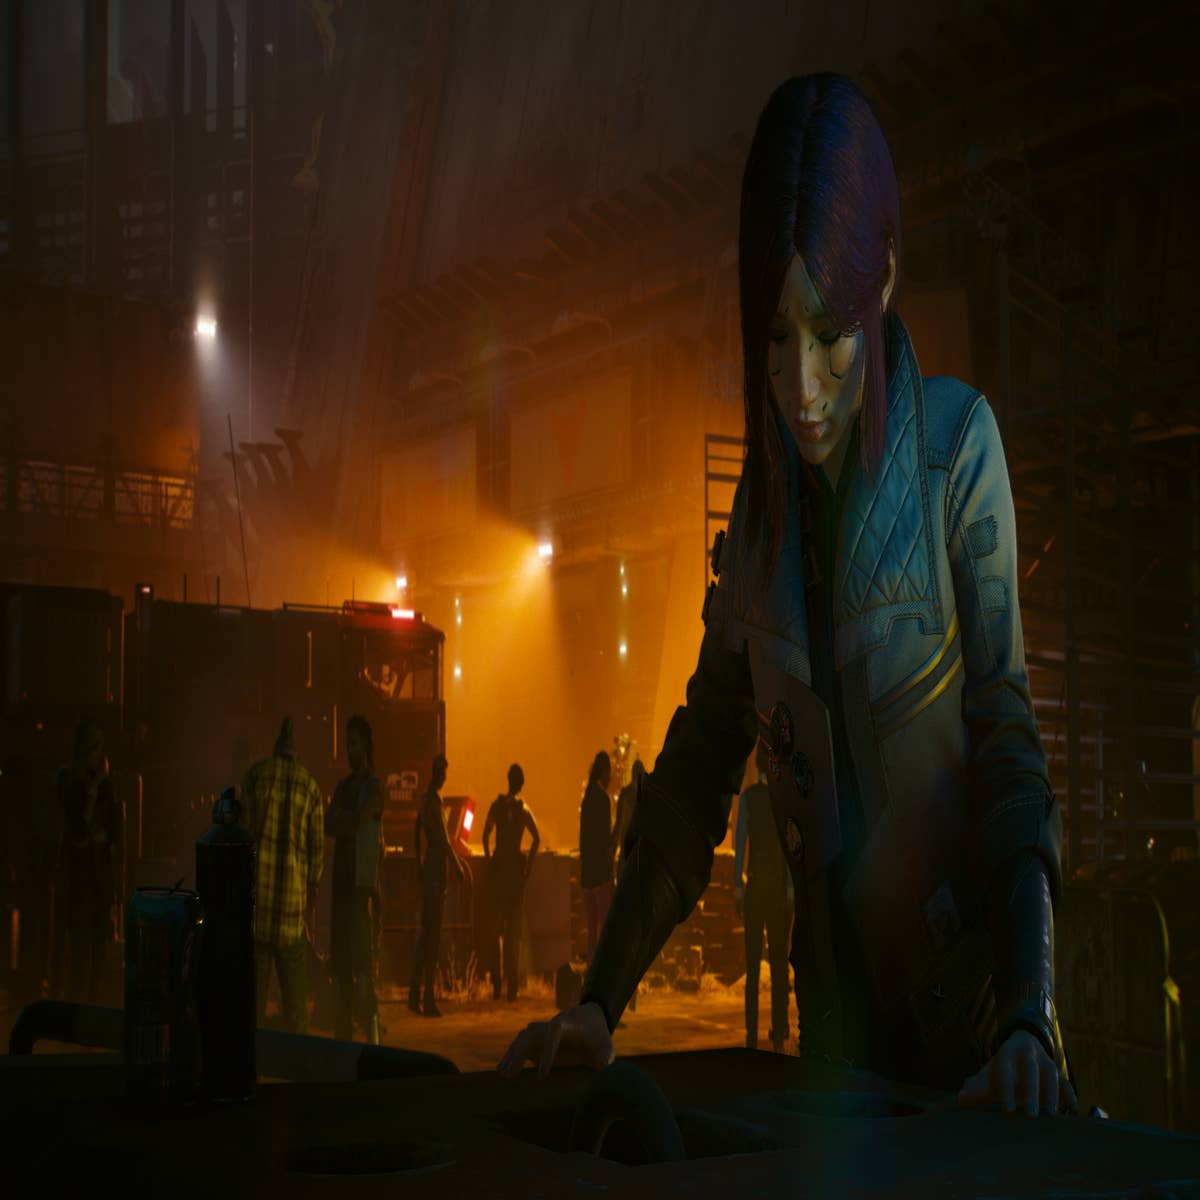 Cyberpunk 2077 sequel gets promising update after Phantom Liberty release